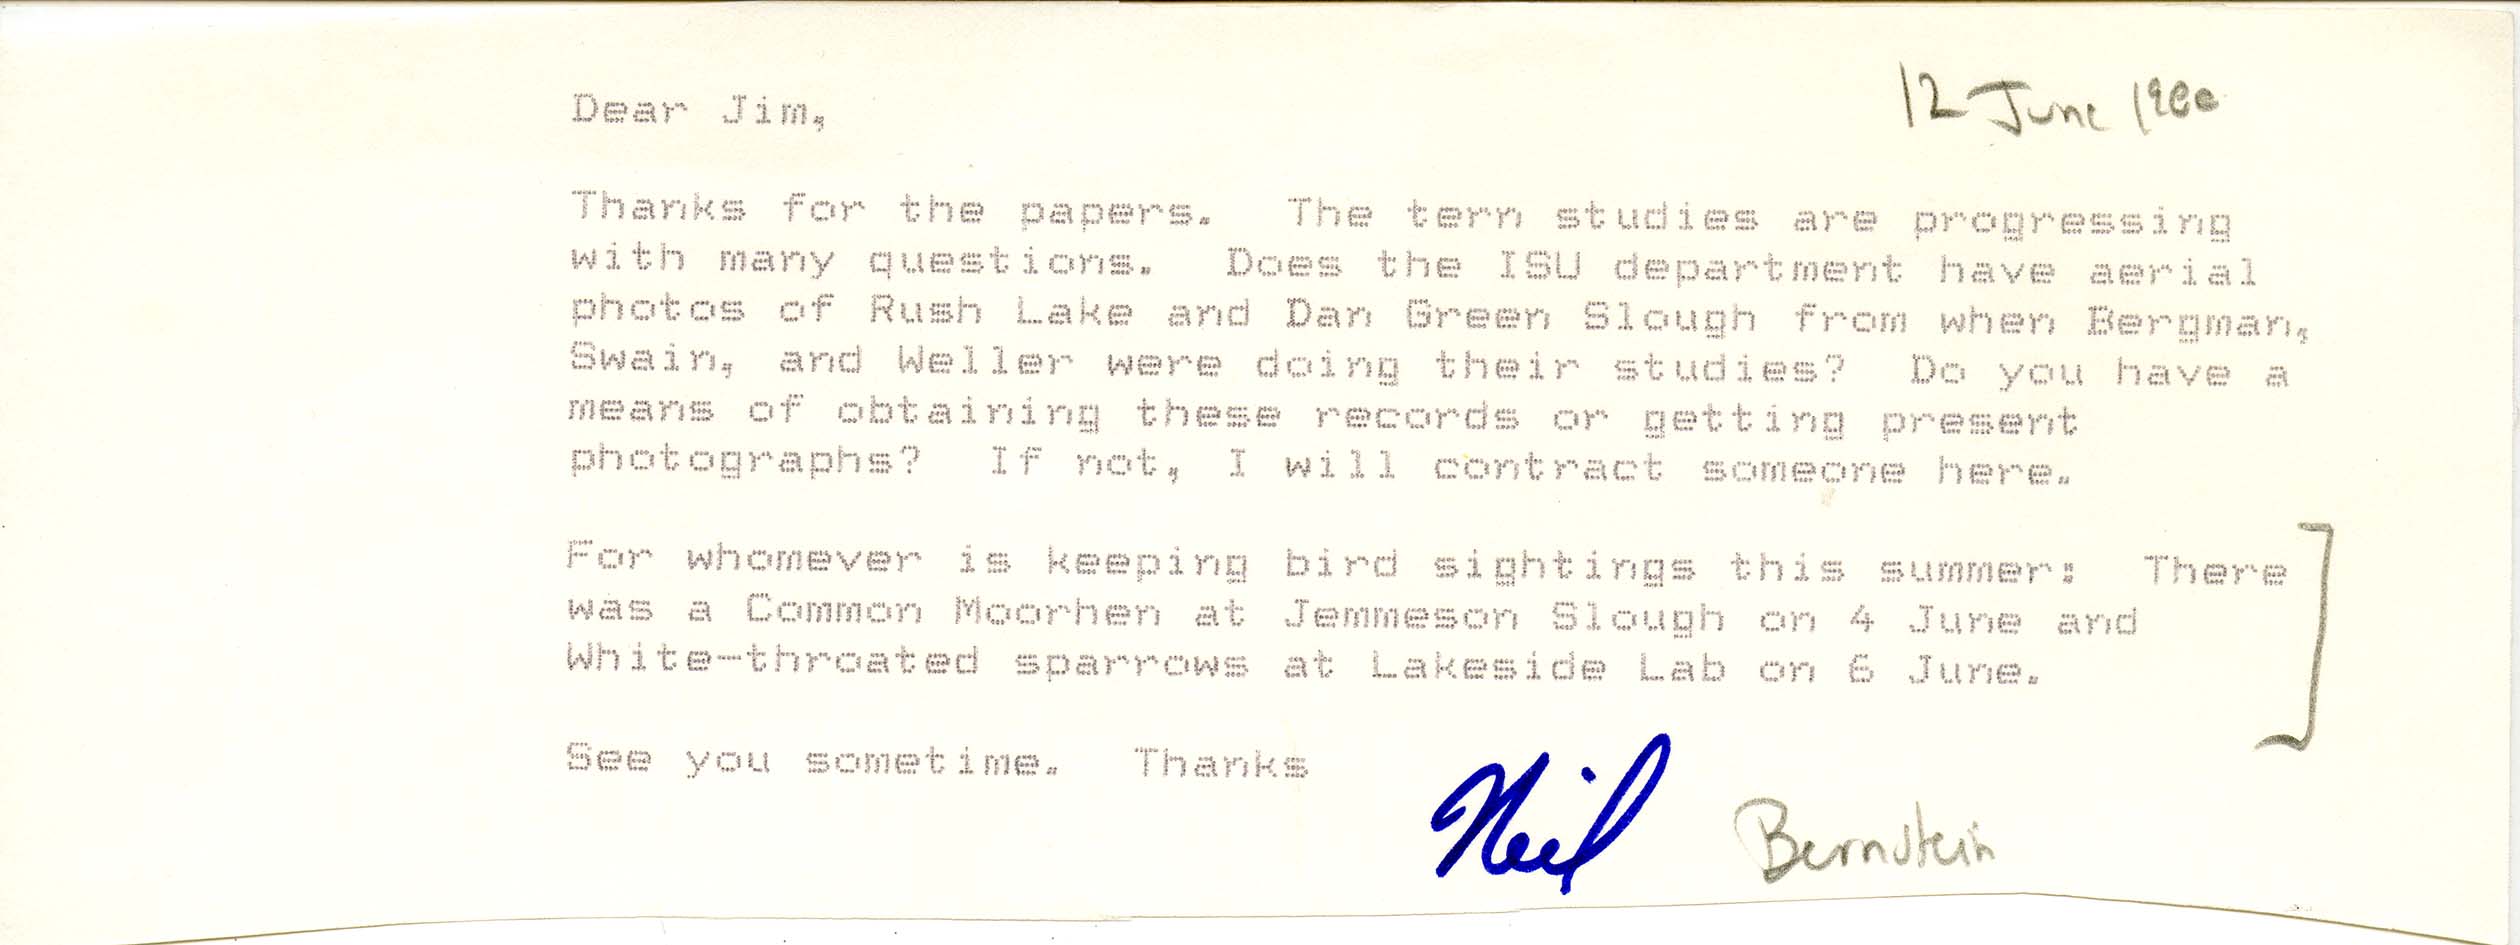 Neil Bernstein letter to James J. Dinsmore regarding aerial photographs, June 12, 1988